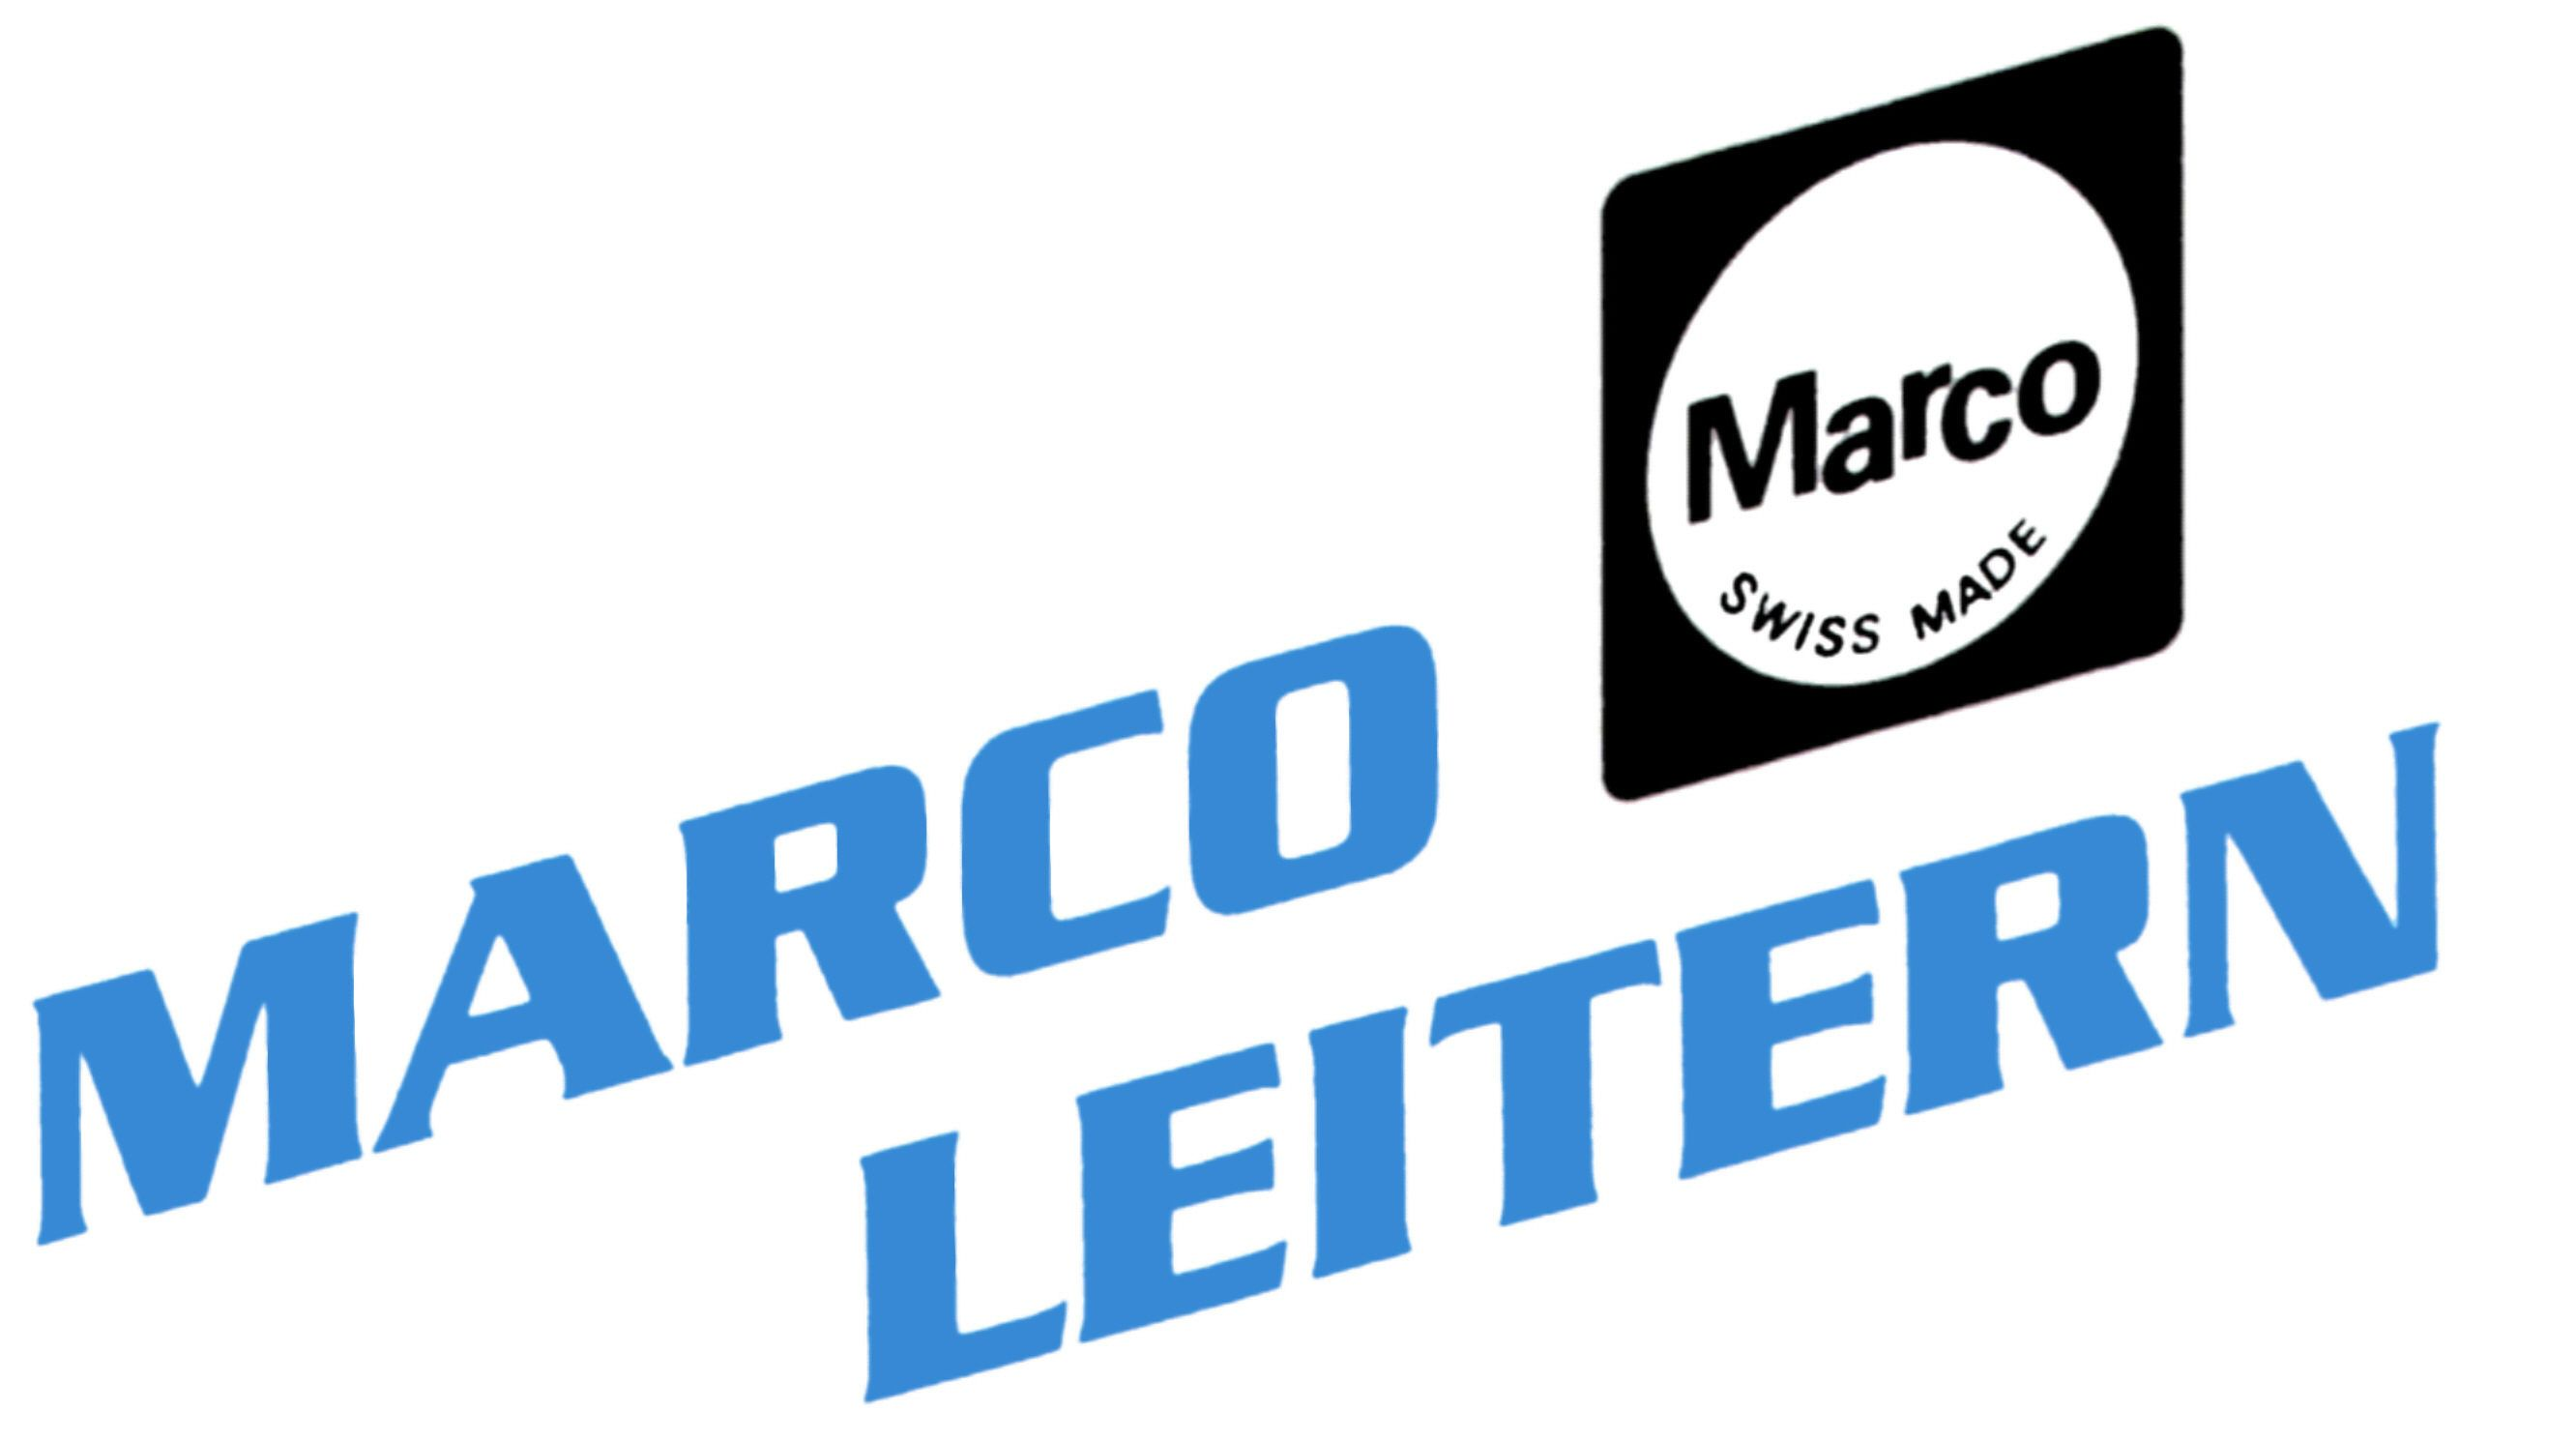 Marbet AG Marco Leitern